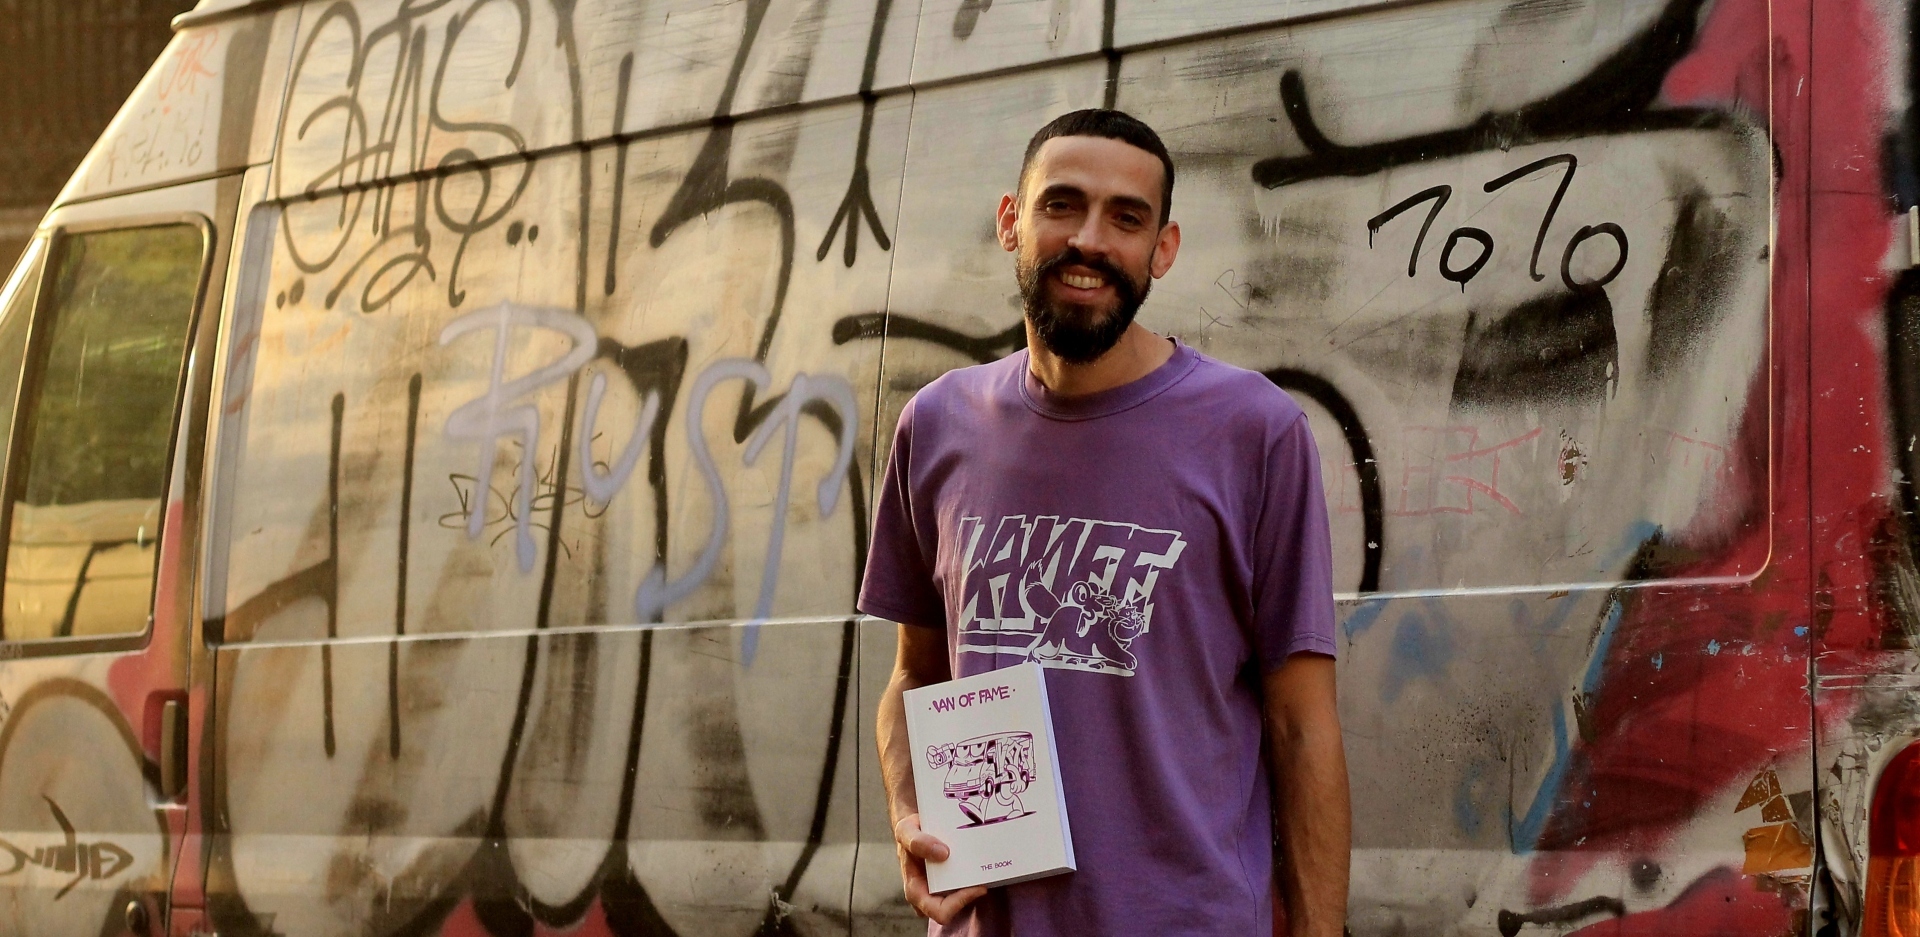 Van Of Fame: Ο ράπερ Φάνης Αφανής μιλάει στην Athens Voice για το βιβλίο του στο οποίο κατέγραψε τα γκράφιτι φορτηγά της Αθήνας.